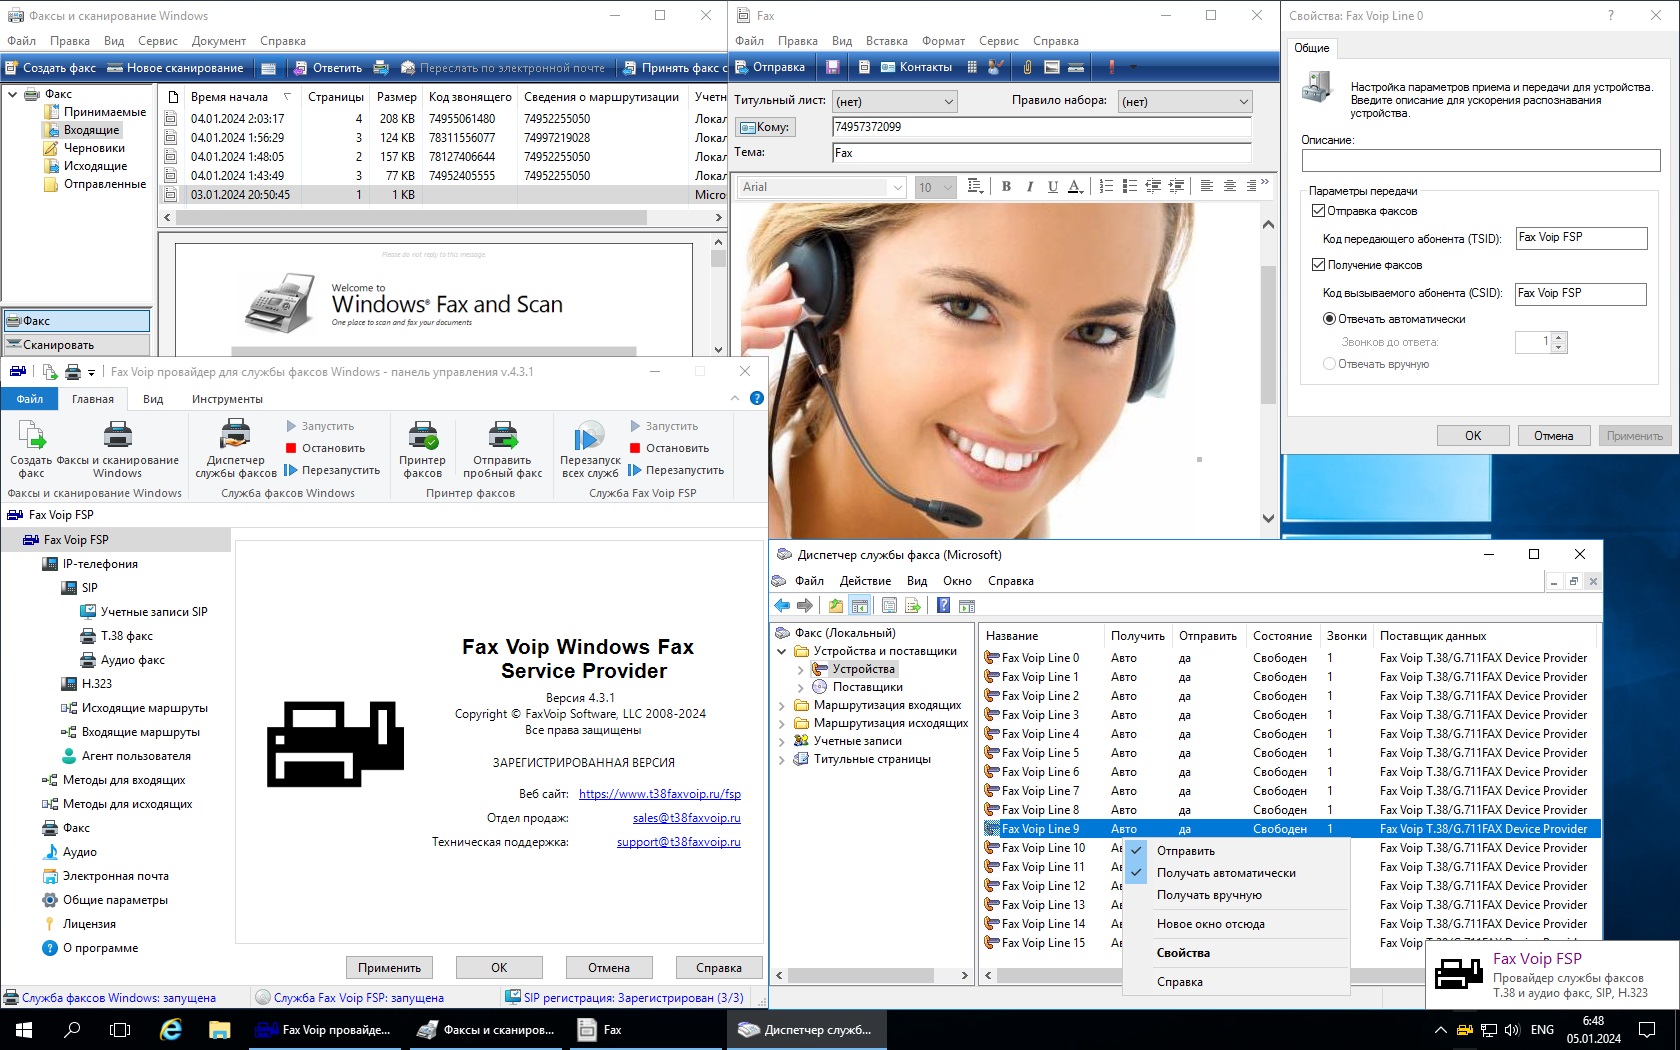 Fax Voip Windows Fax Service Provider